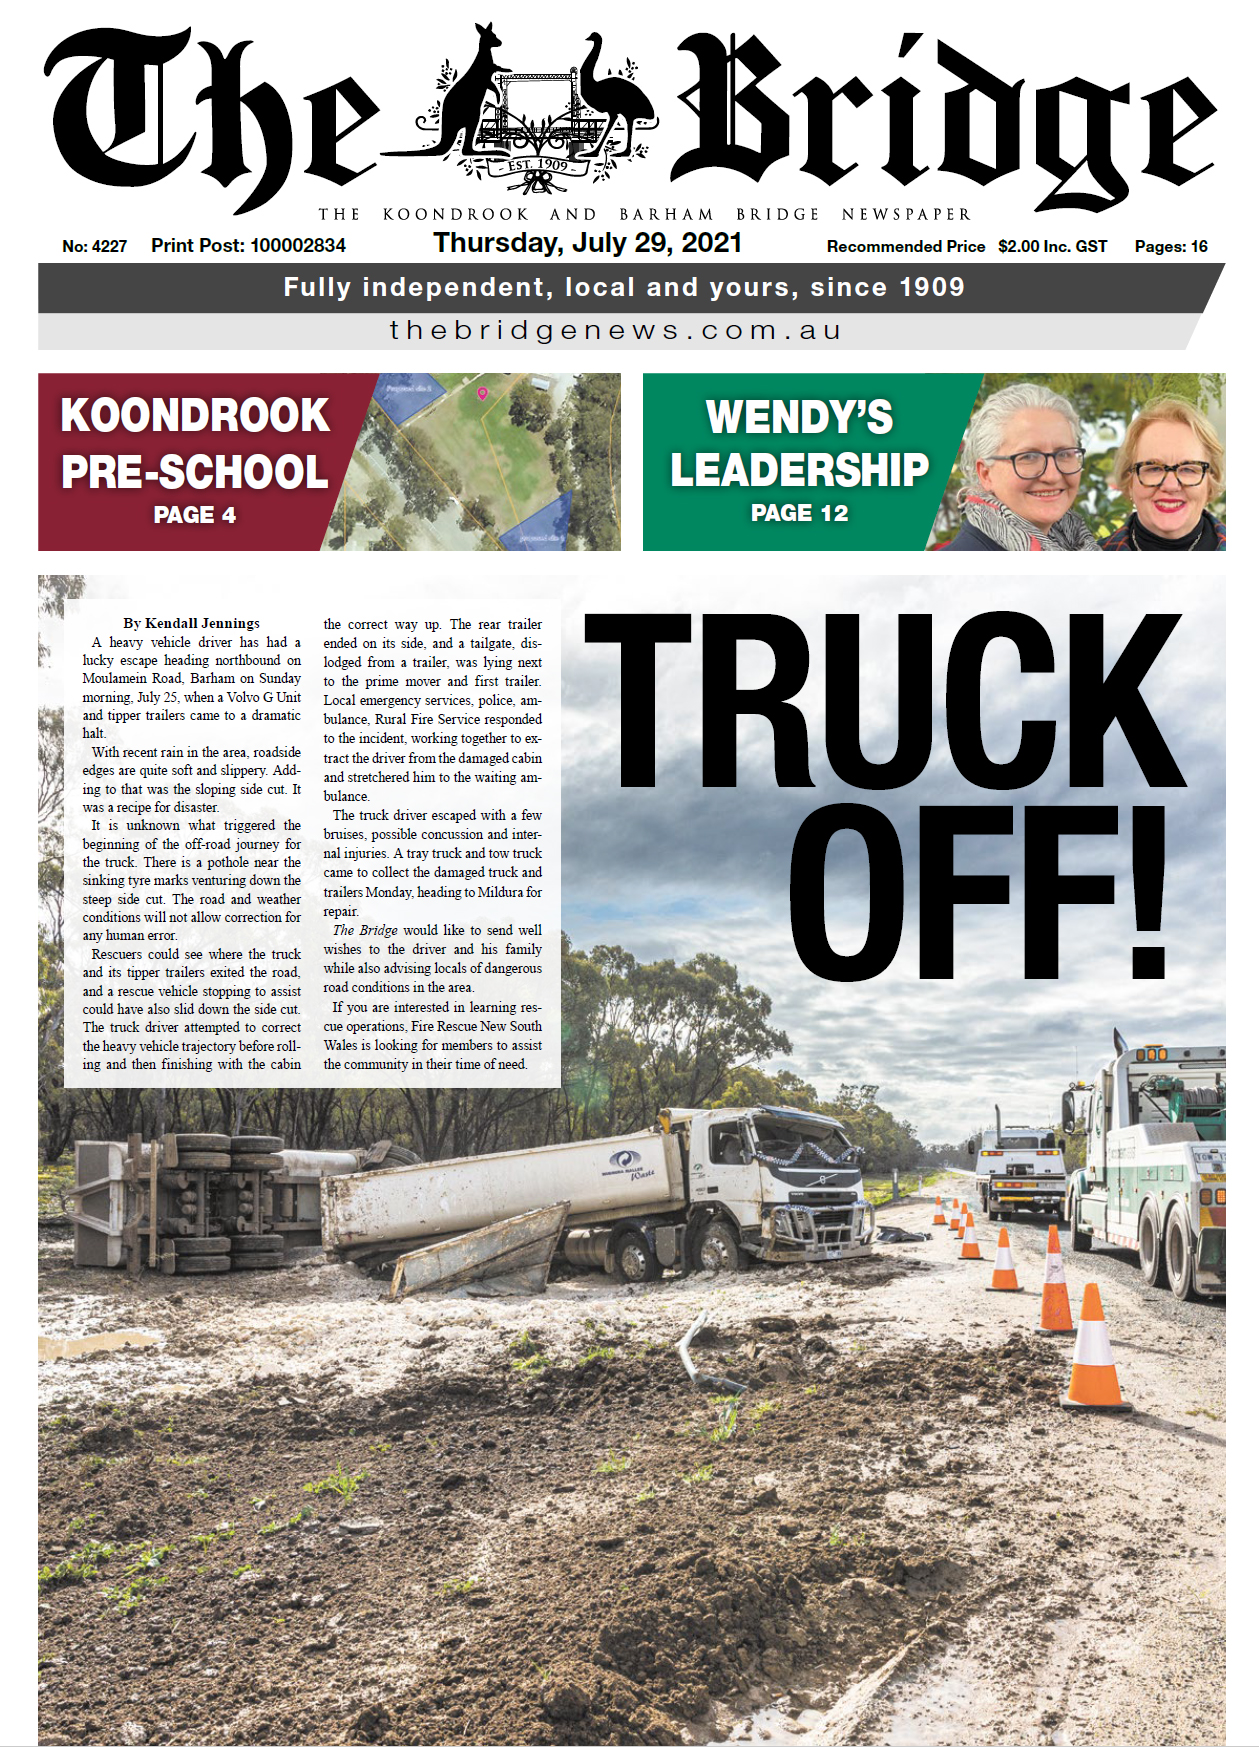 The Koondrook and Barham Bridge Newspaper 29 July 2021